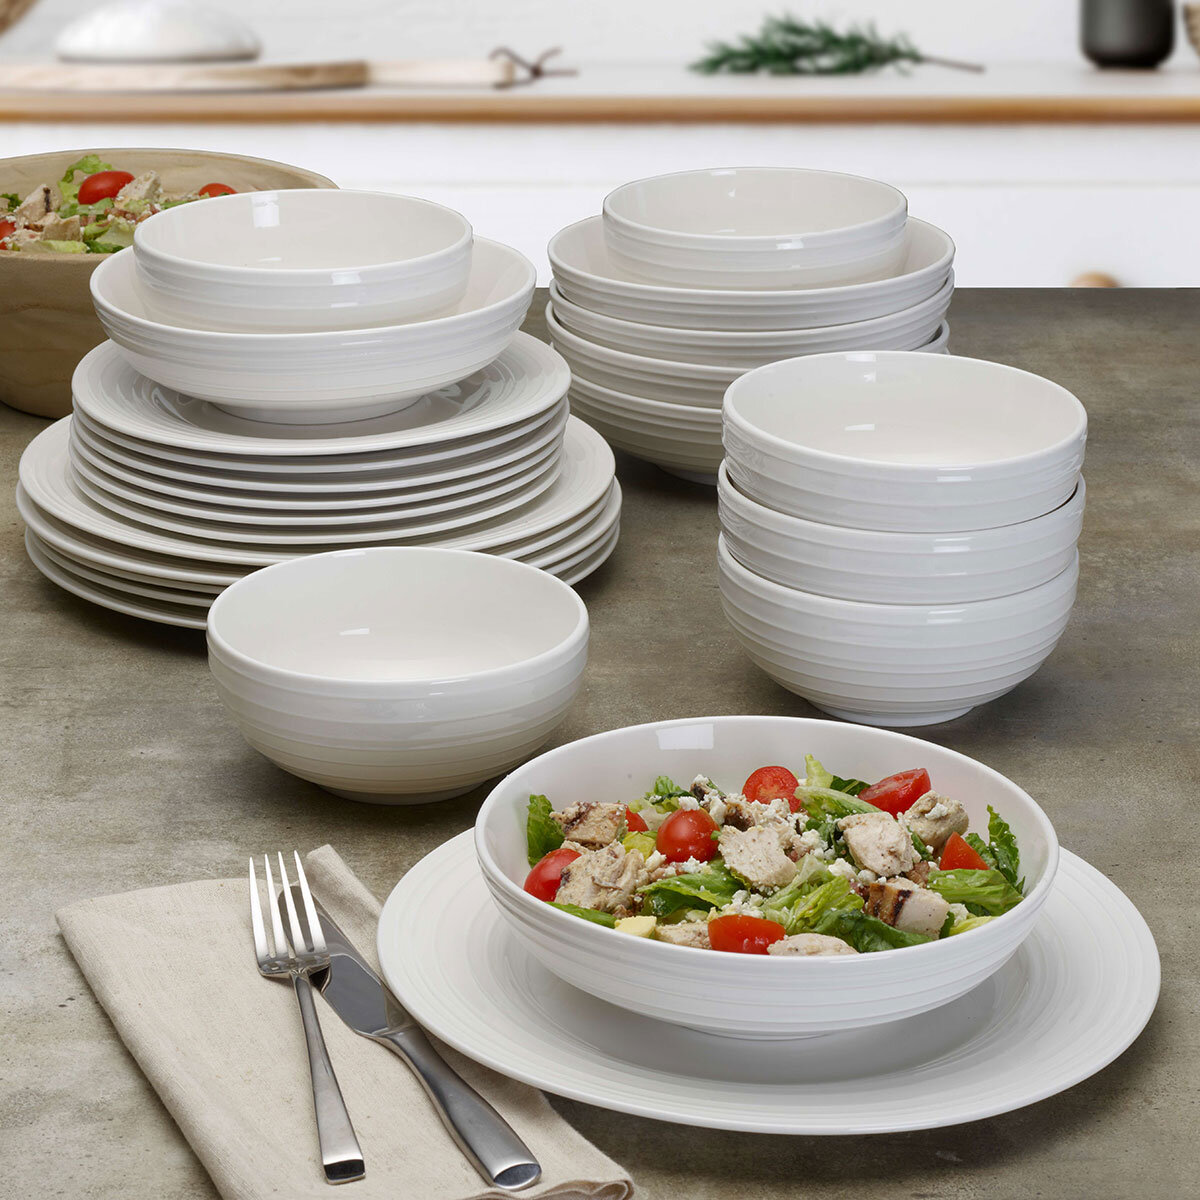 Mikasa Swirl Porcelain Dinnerware Set, 24 Piece